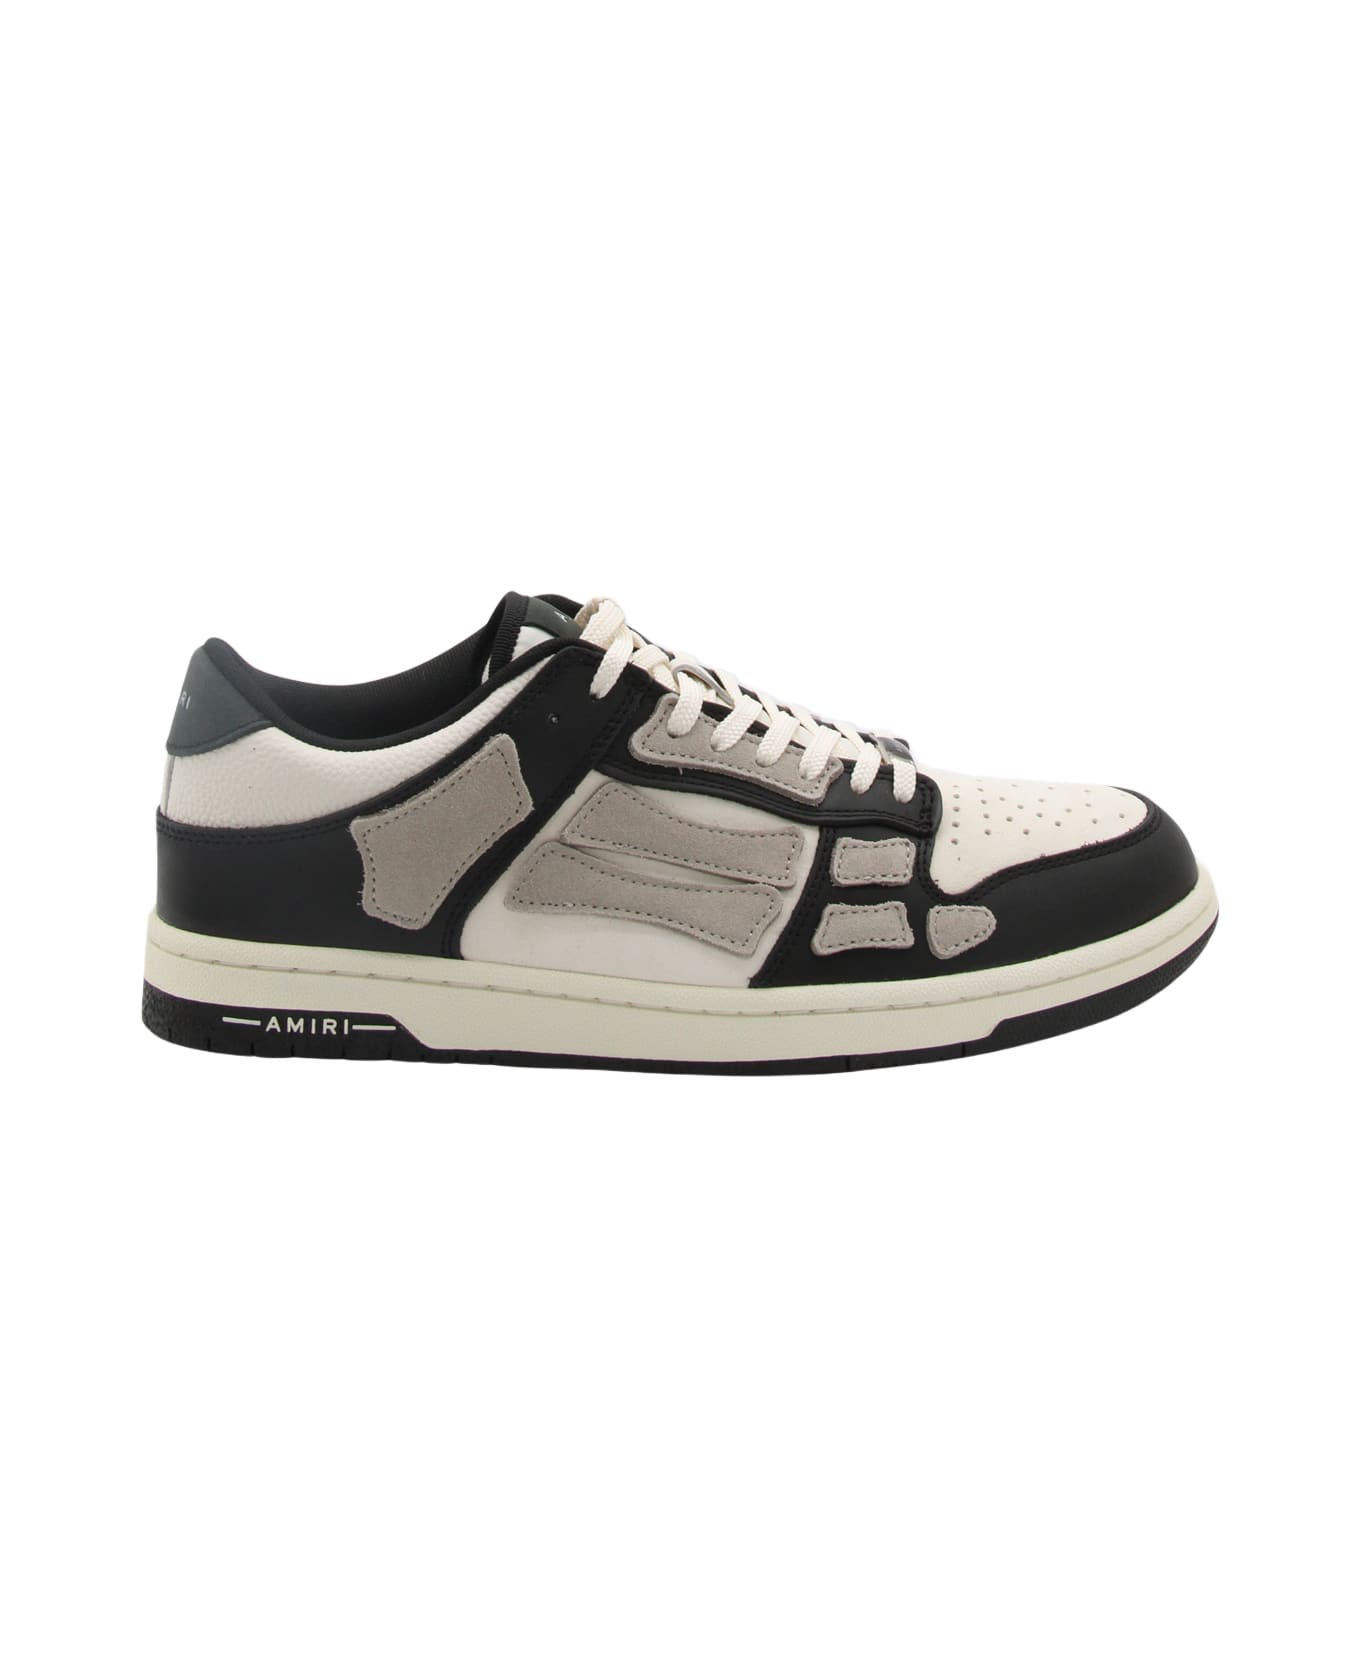 AMIRI Black Alabaster Leather Skel Sneakers - Nero e Bianco